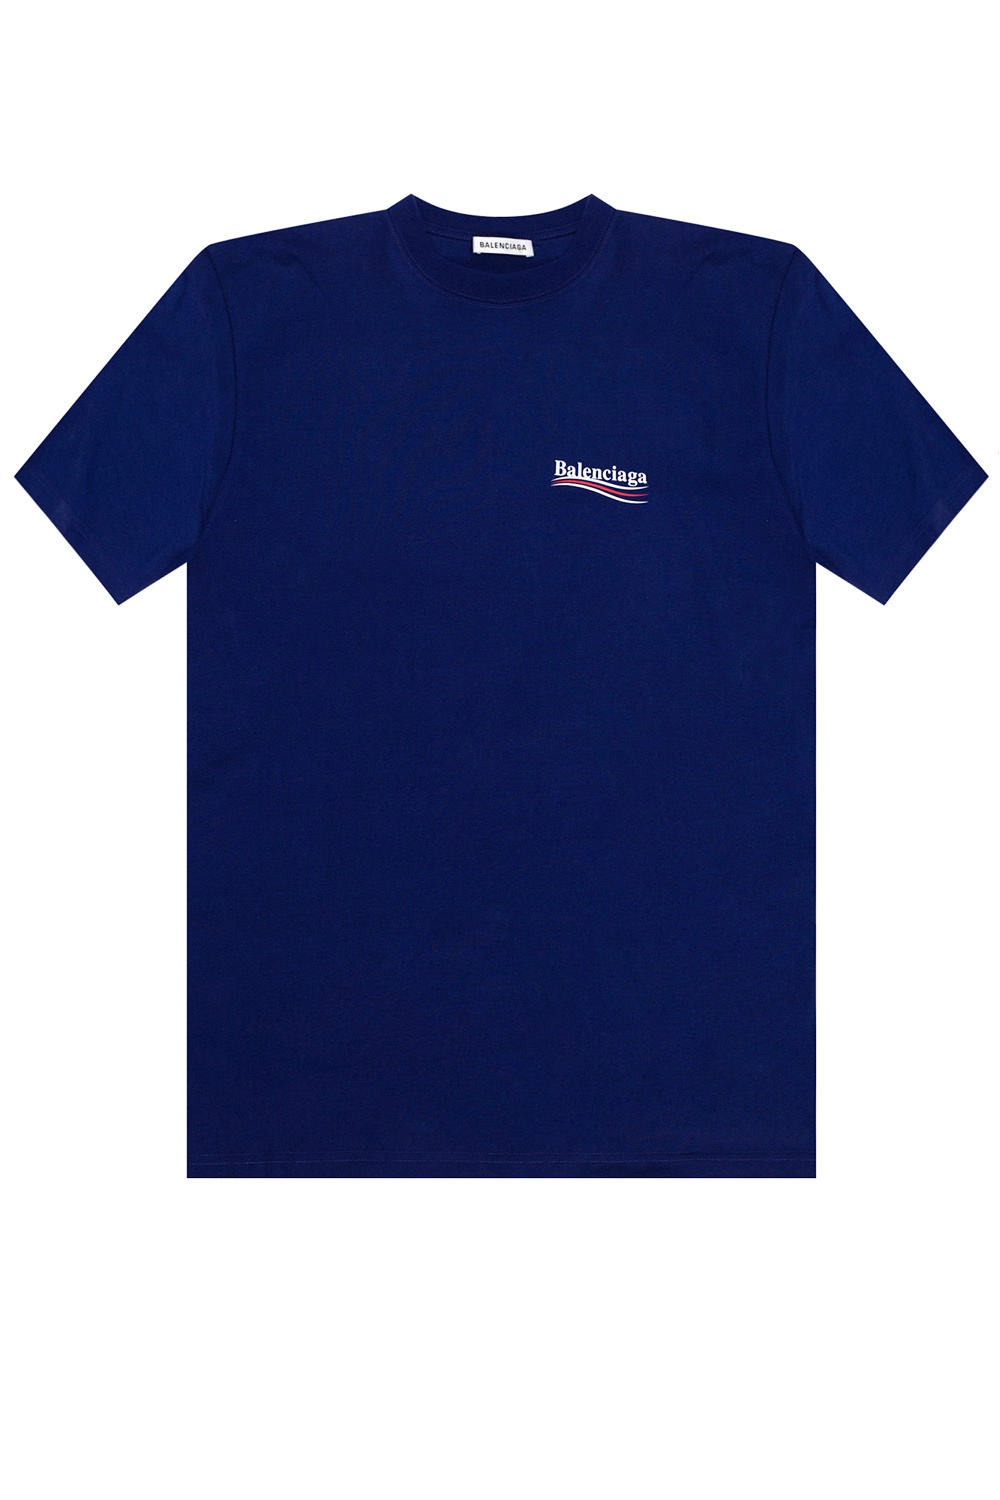 IetpShops 中国- 深蓝色品牌T恤Balenciaga - Han Kj benhavn pocket